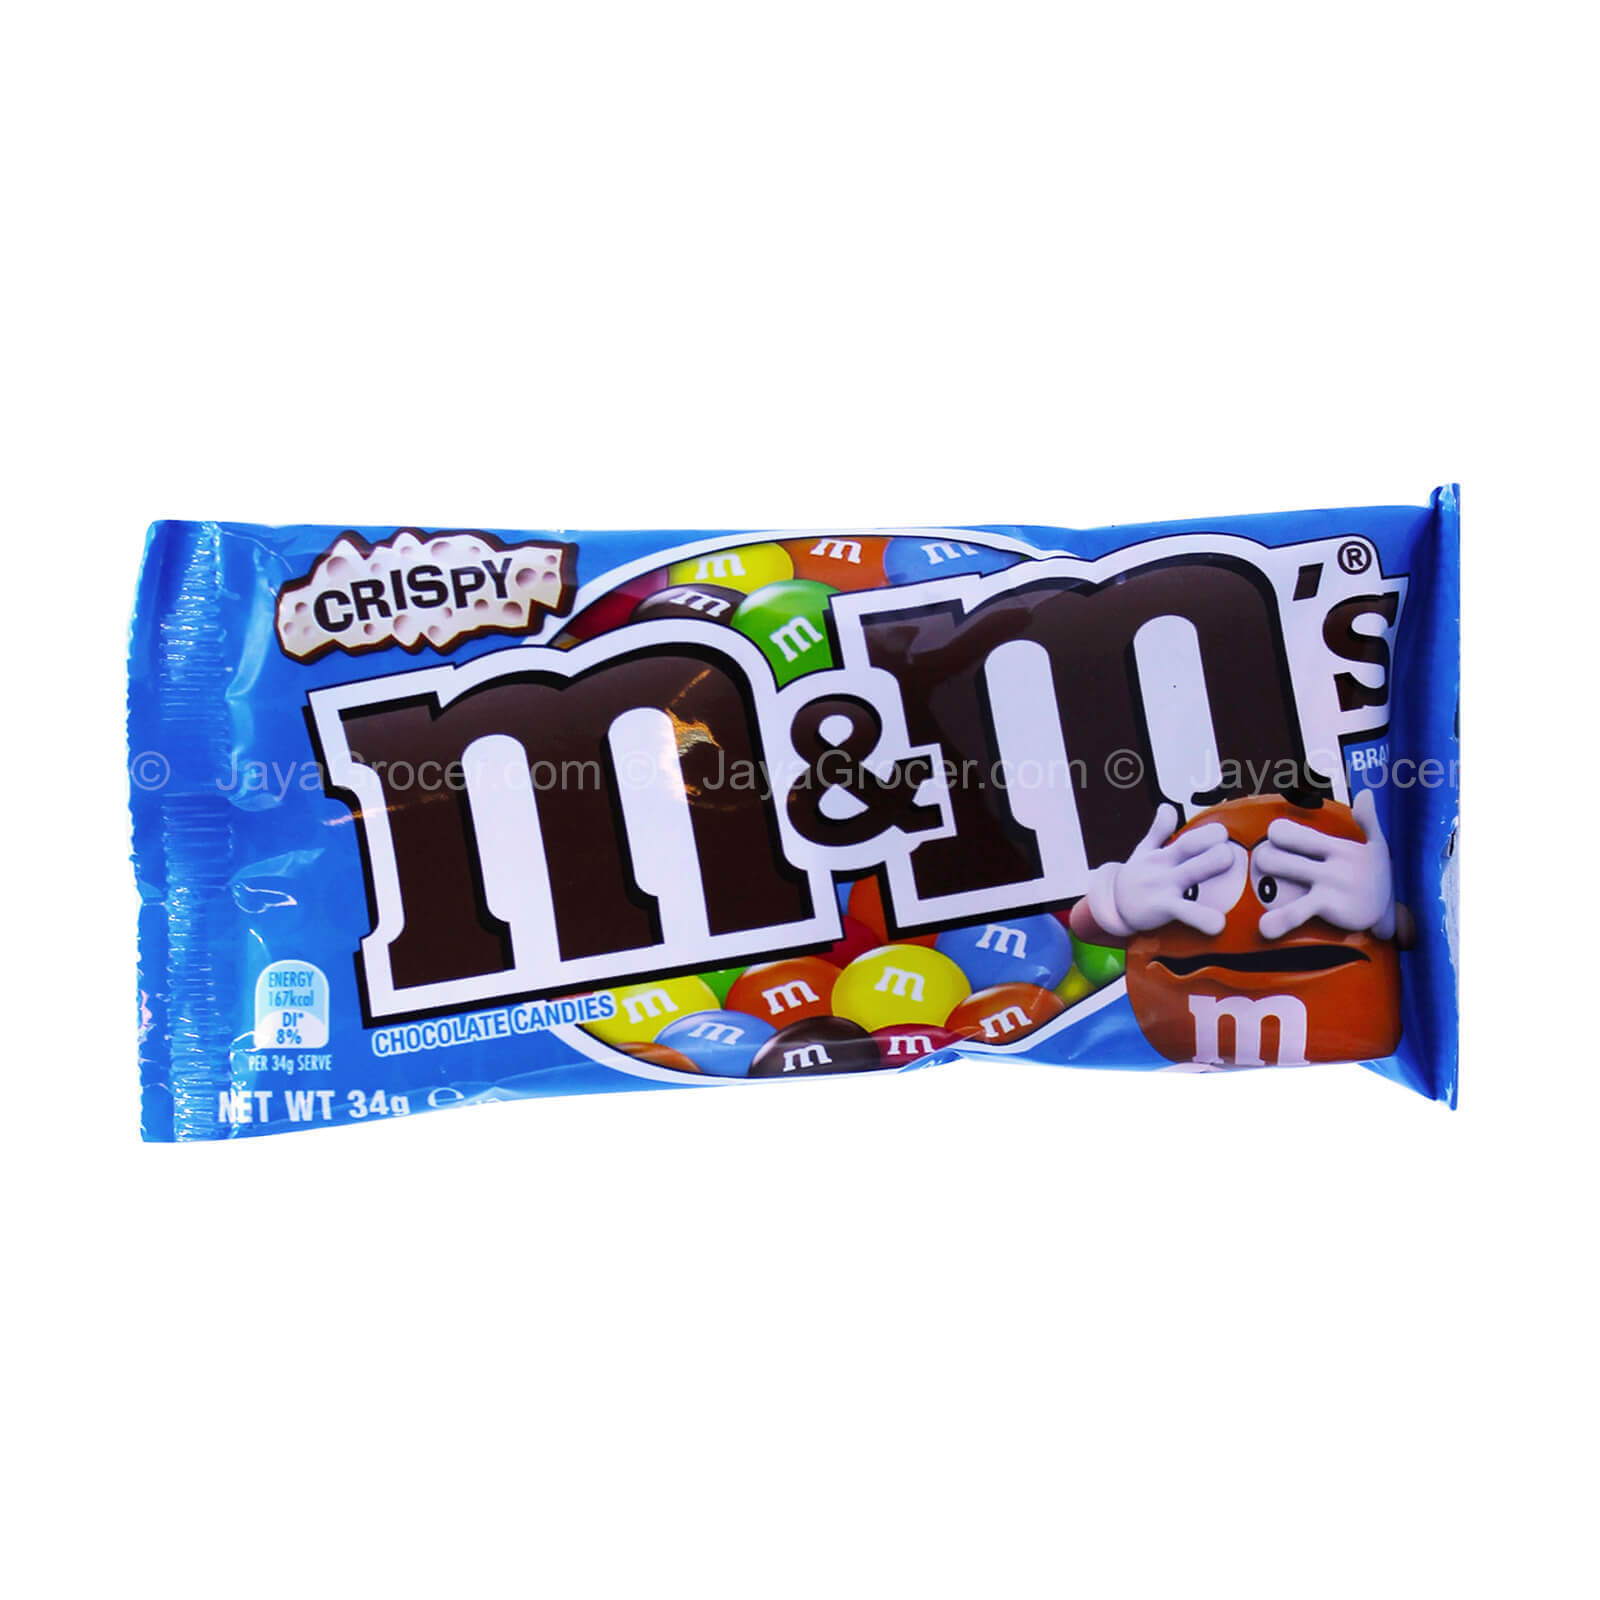 M&M Crispy Chocolate Fun Size 144g Chocolate / Crispy